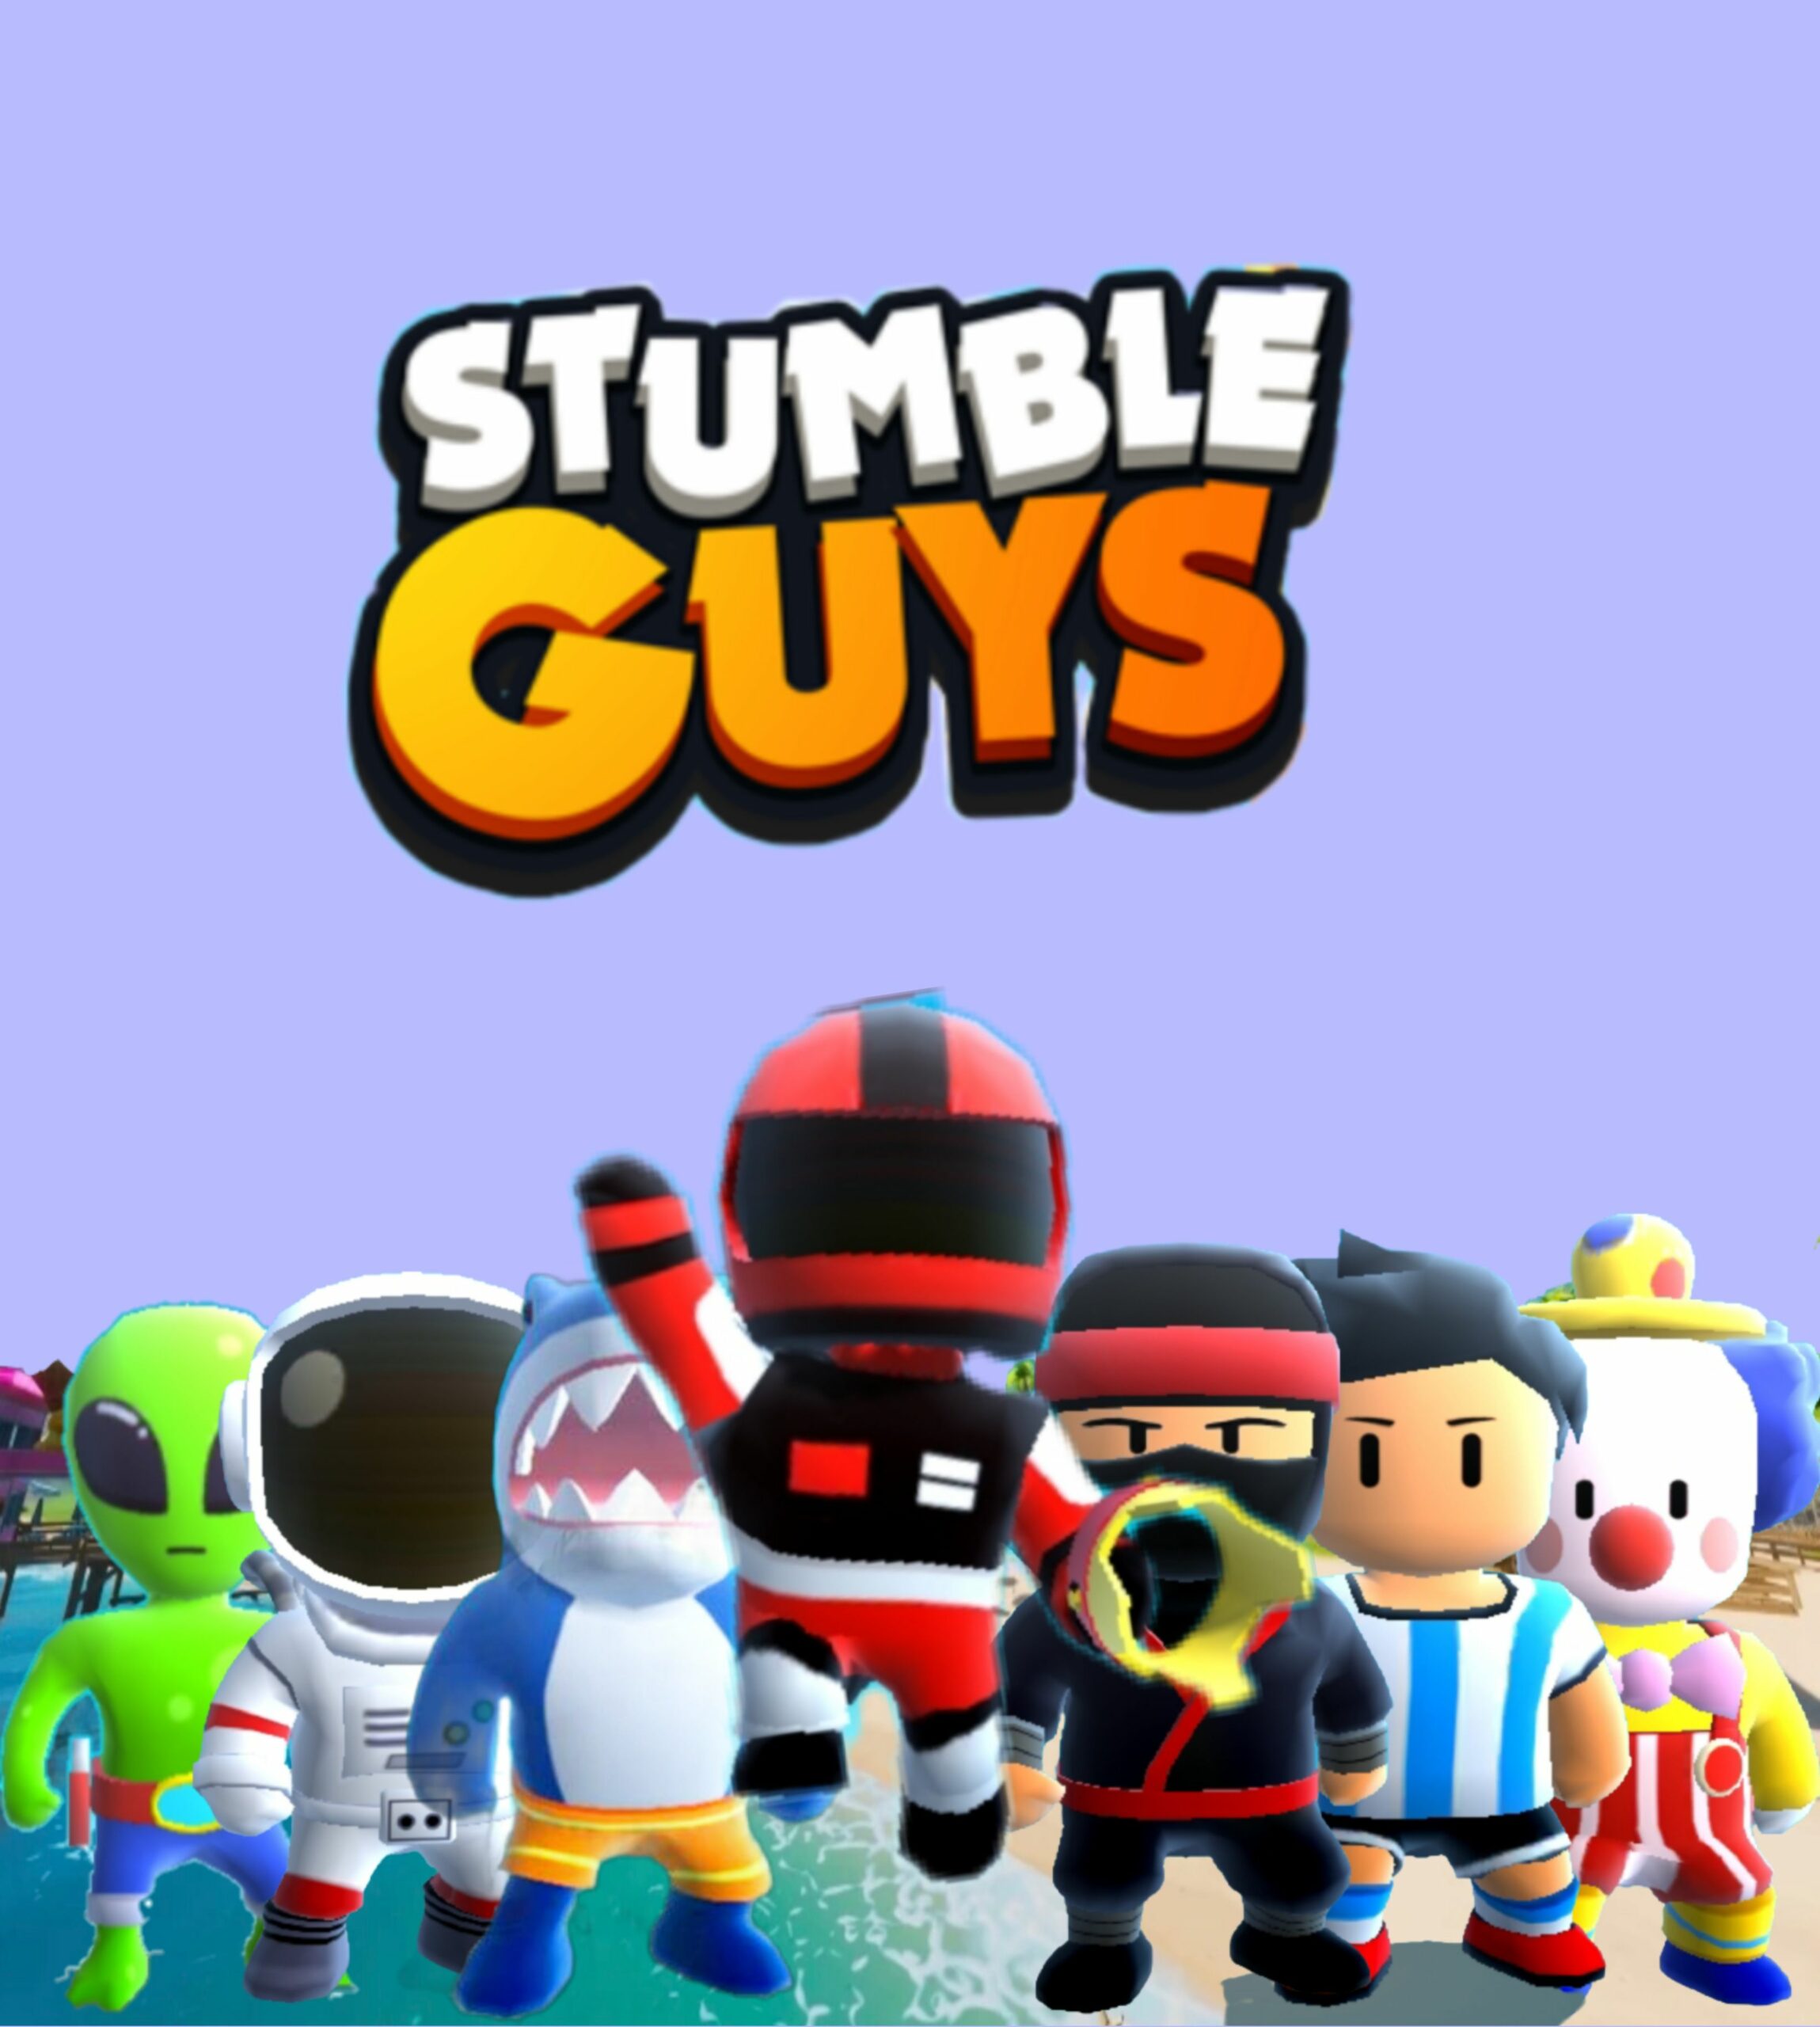 stumble guys